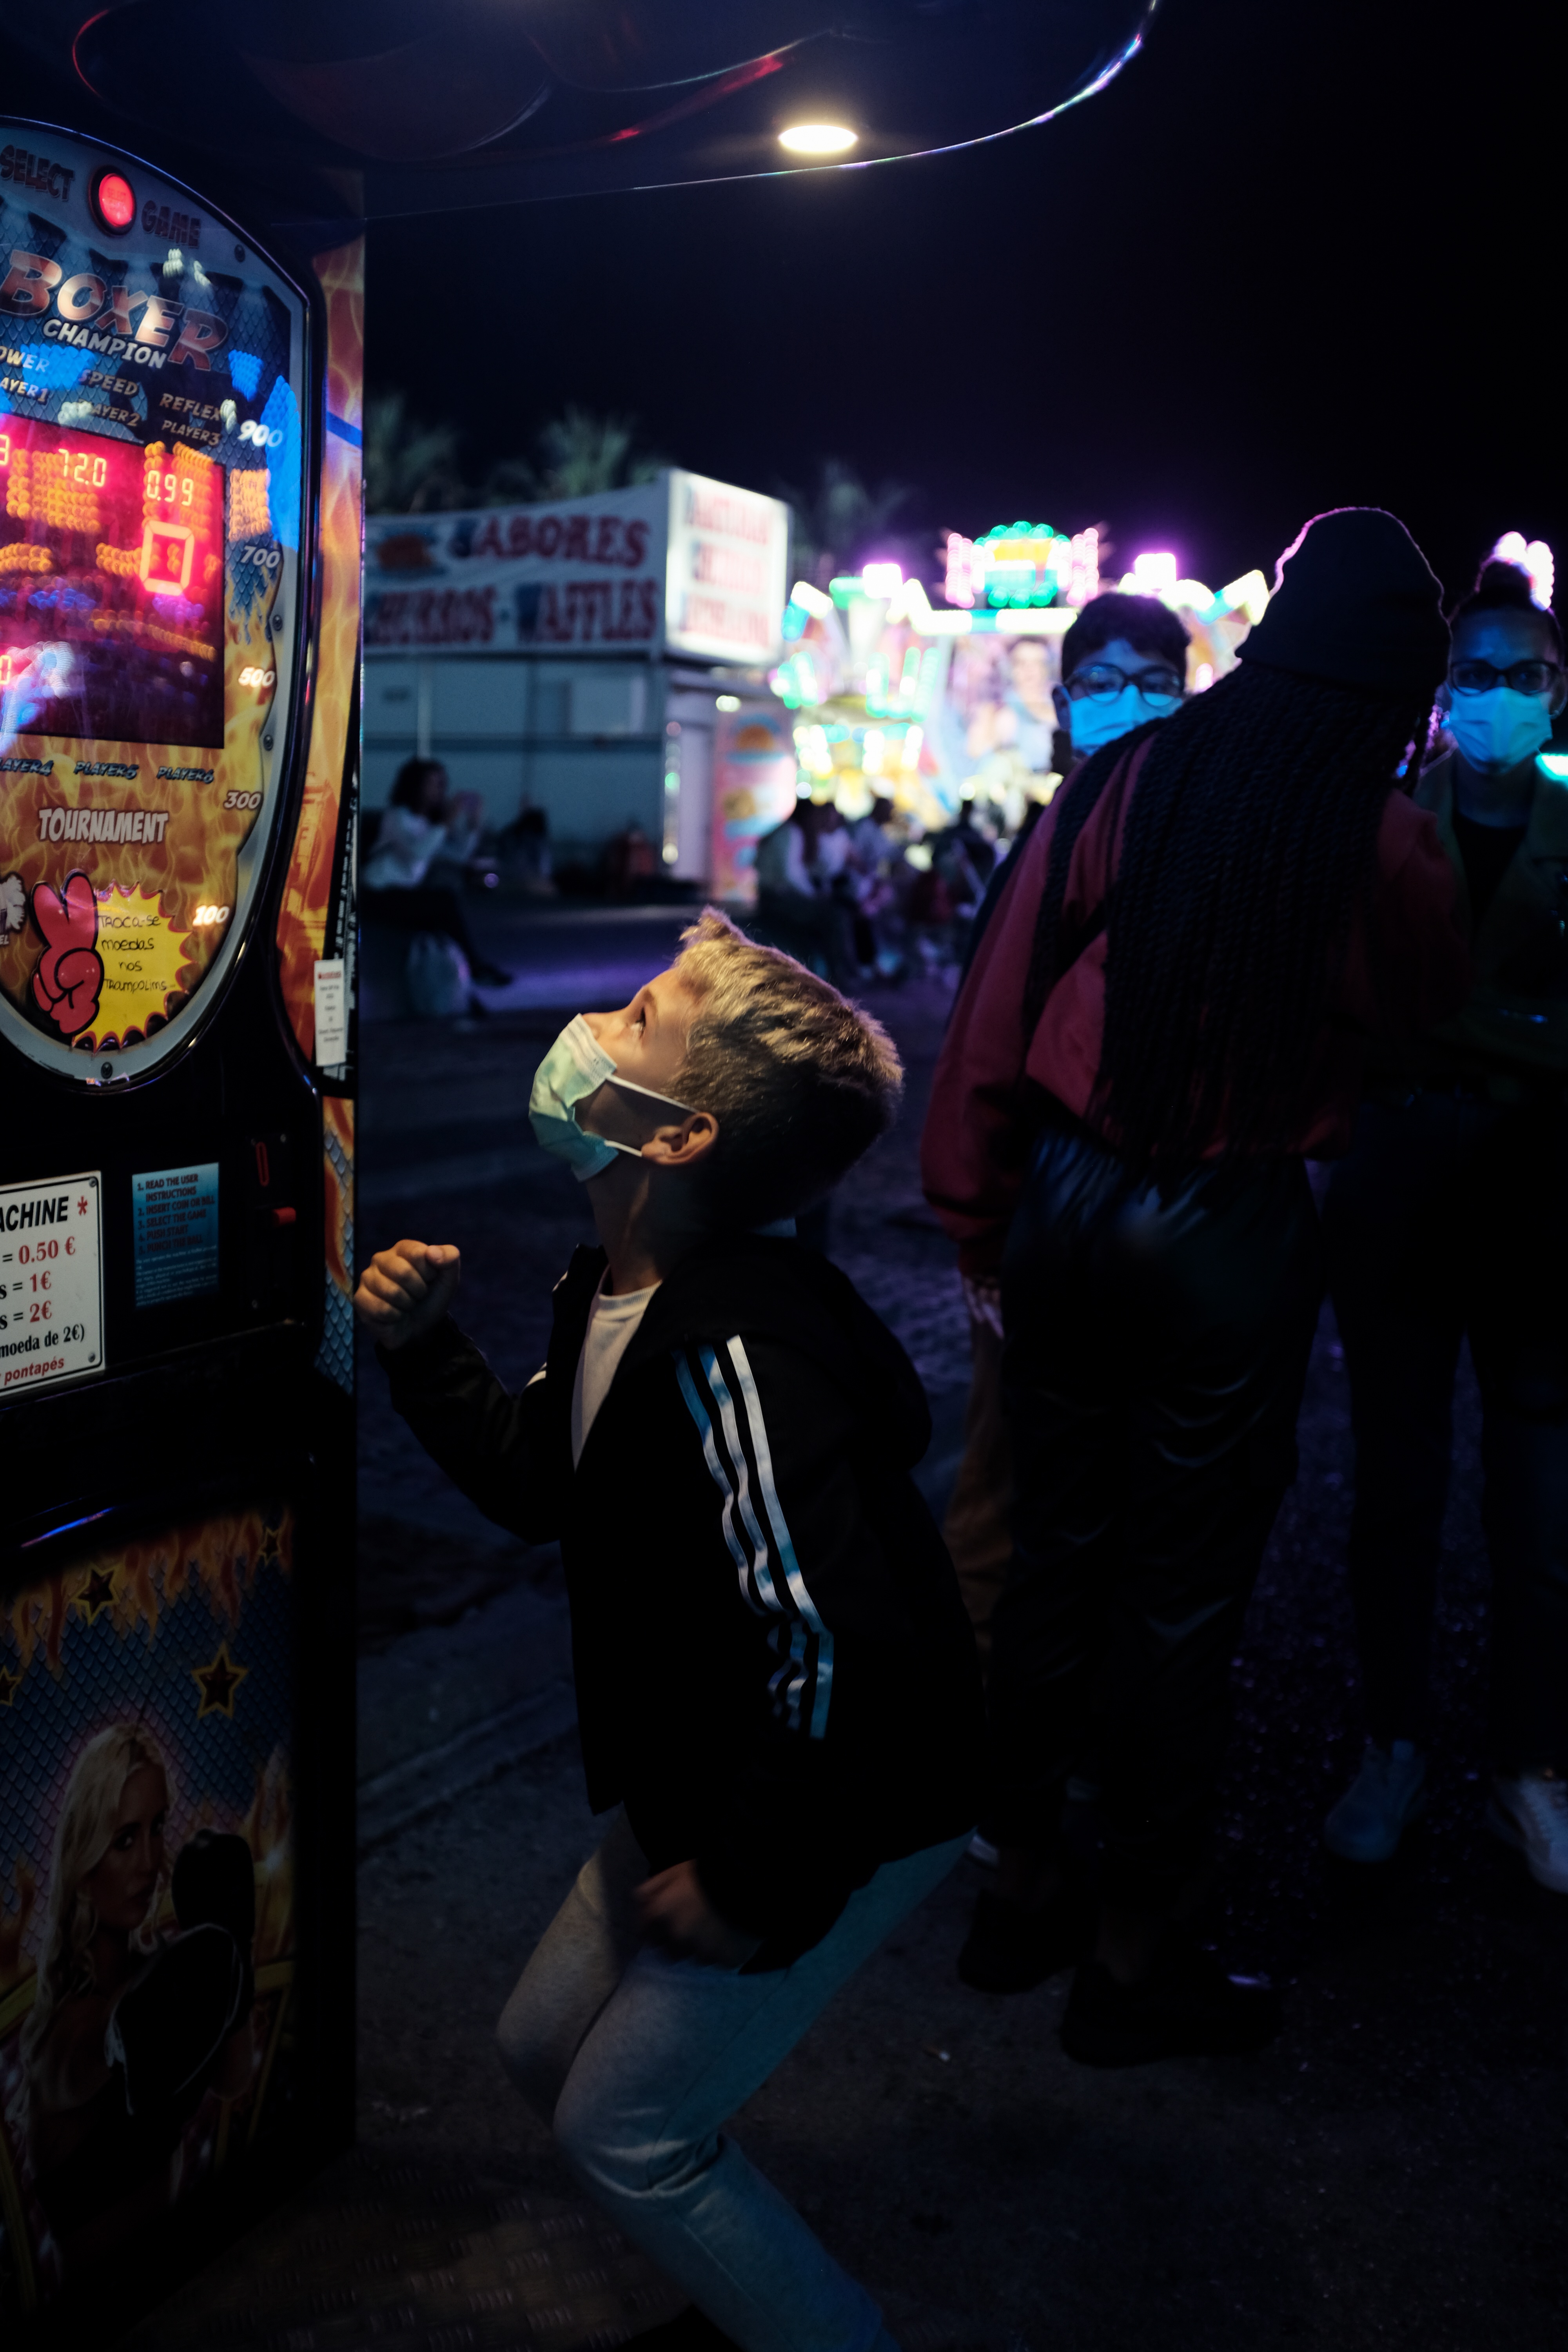 Boy jumping up to reach a button on a fairground arcade game.